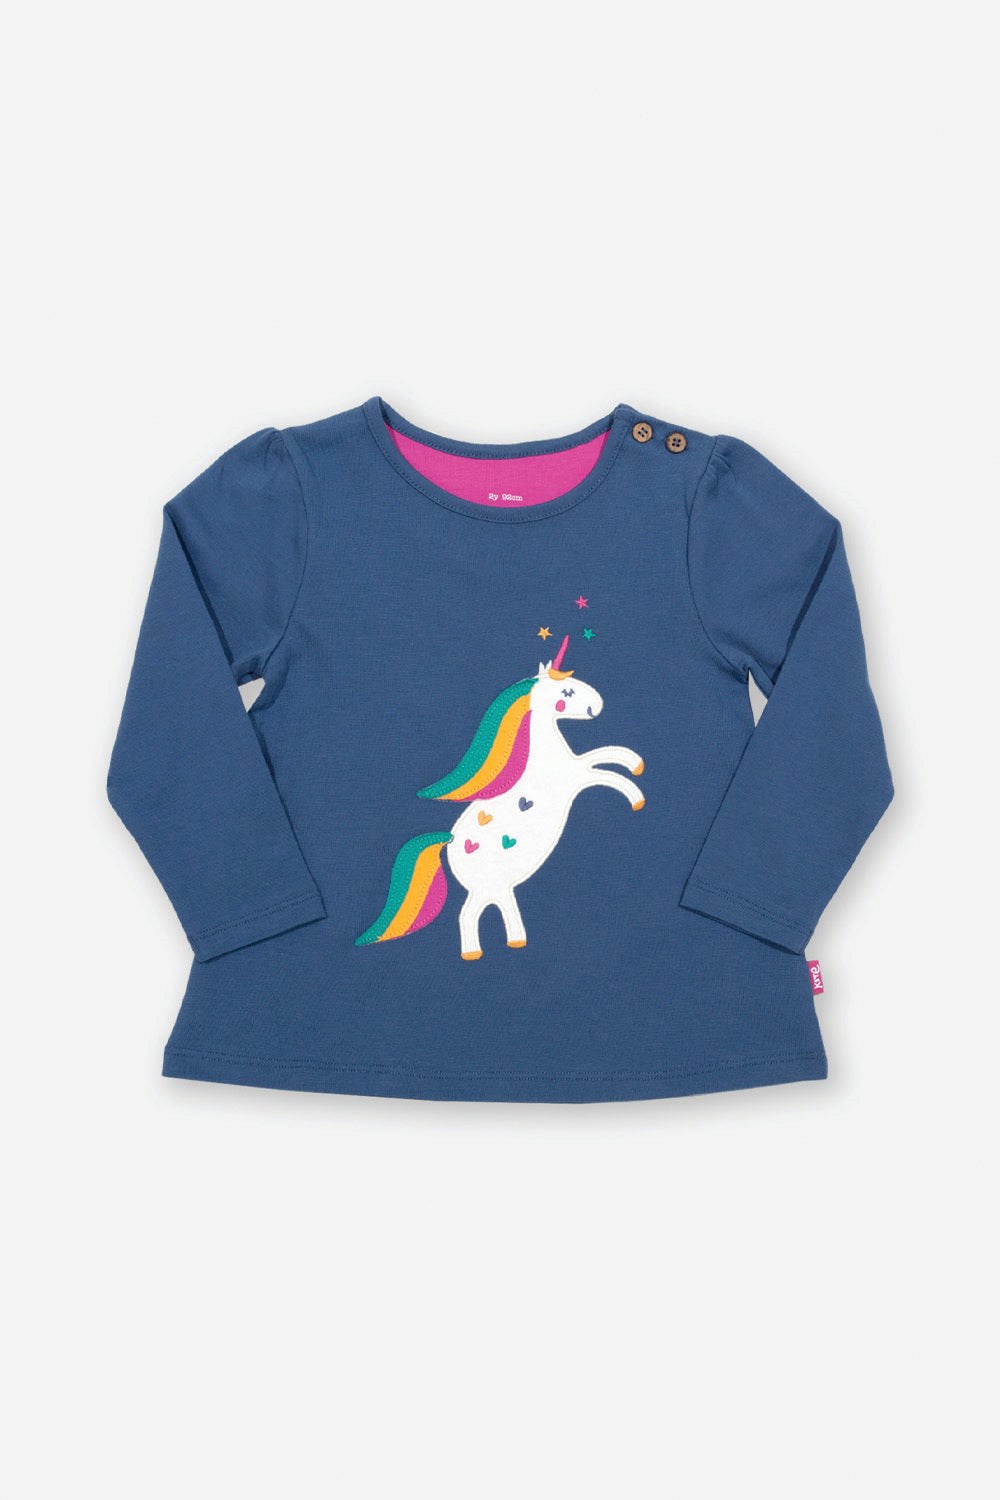 Kids Magical Unicorn Tunic -